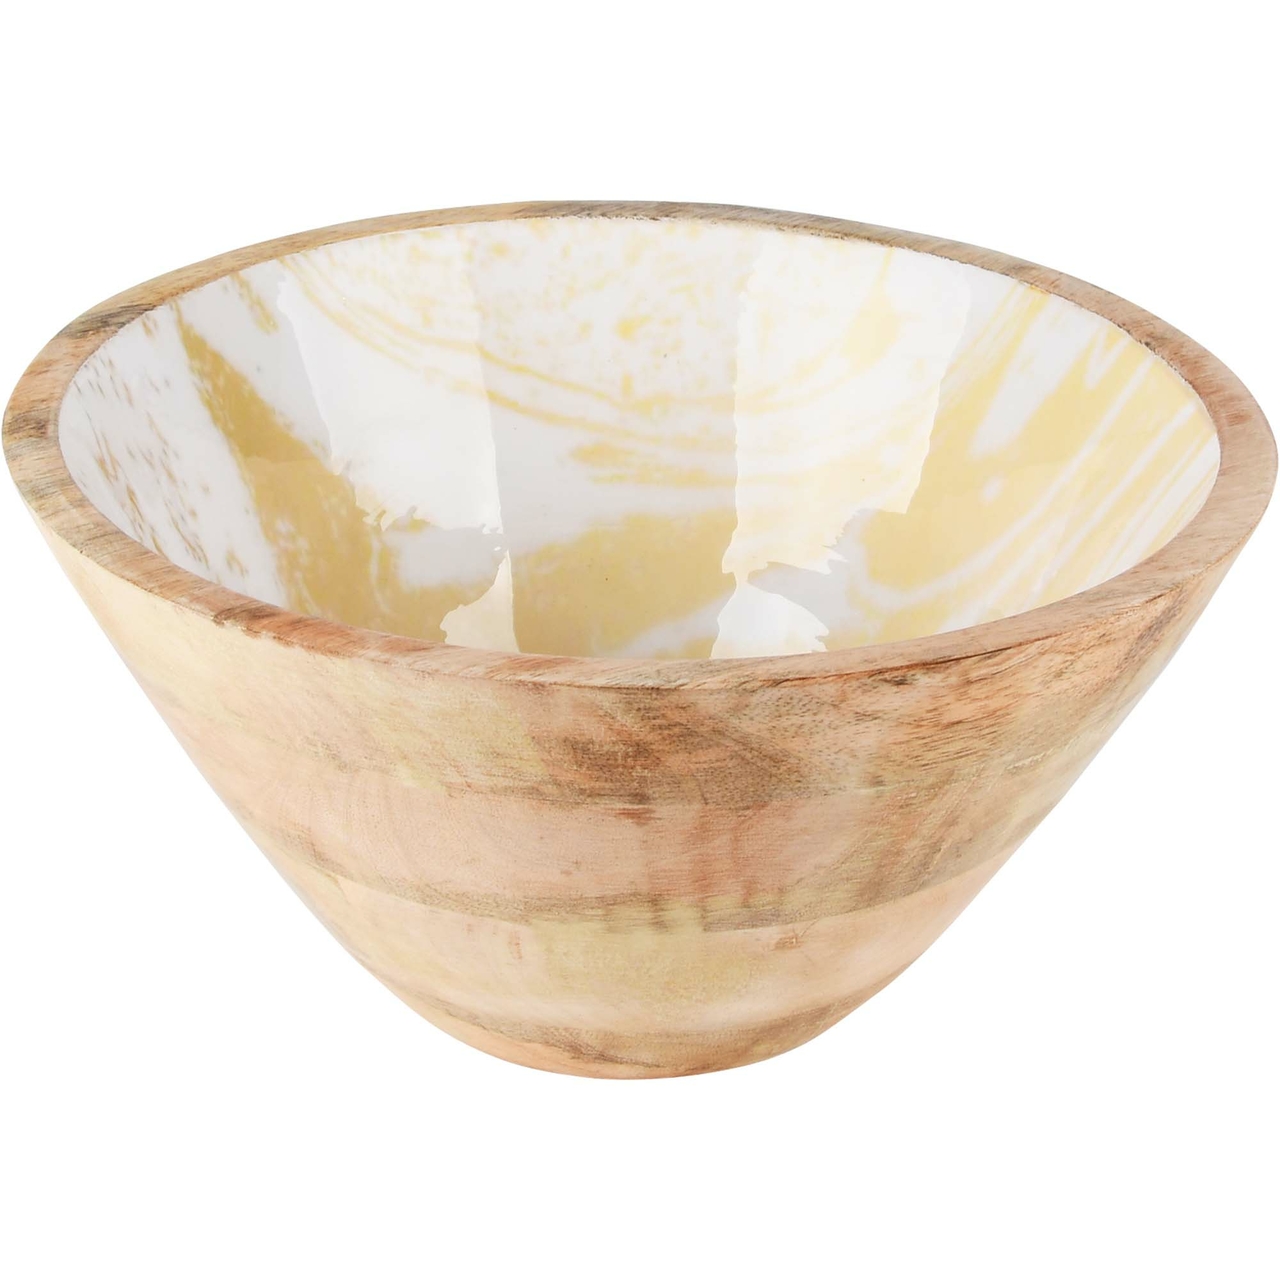 Dekoratief | Bowl 'Marbled', wit/goud, hout, 25x25x12cm | A228085